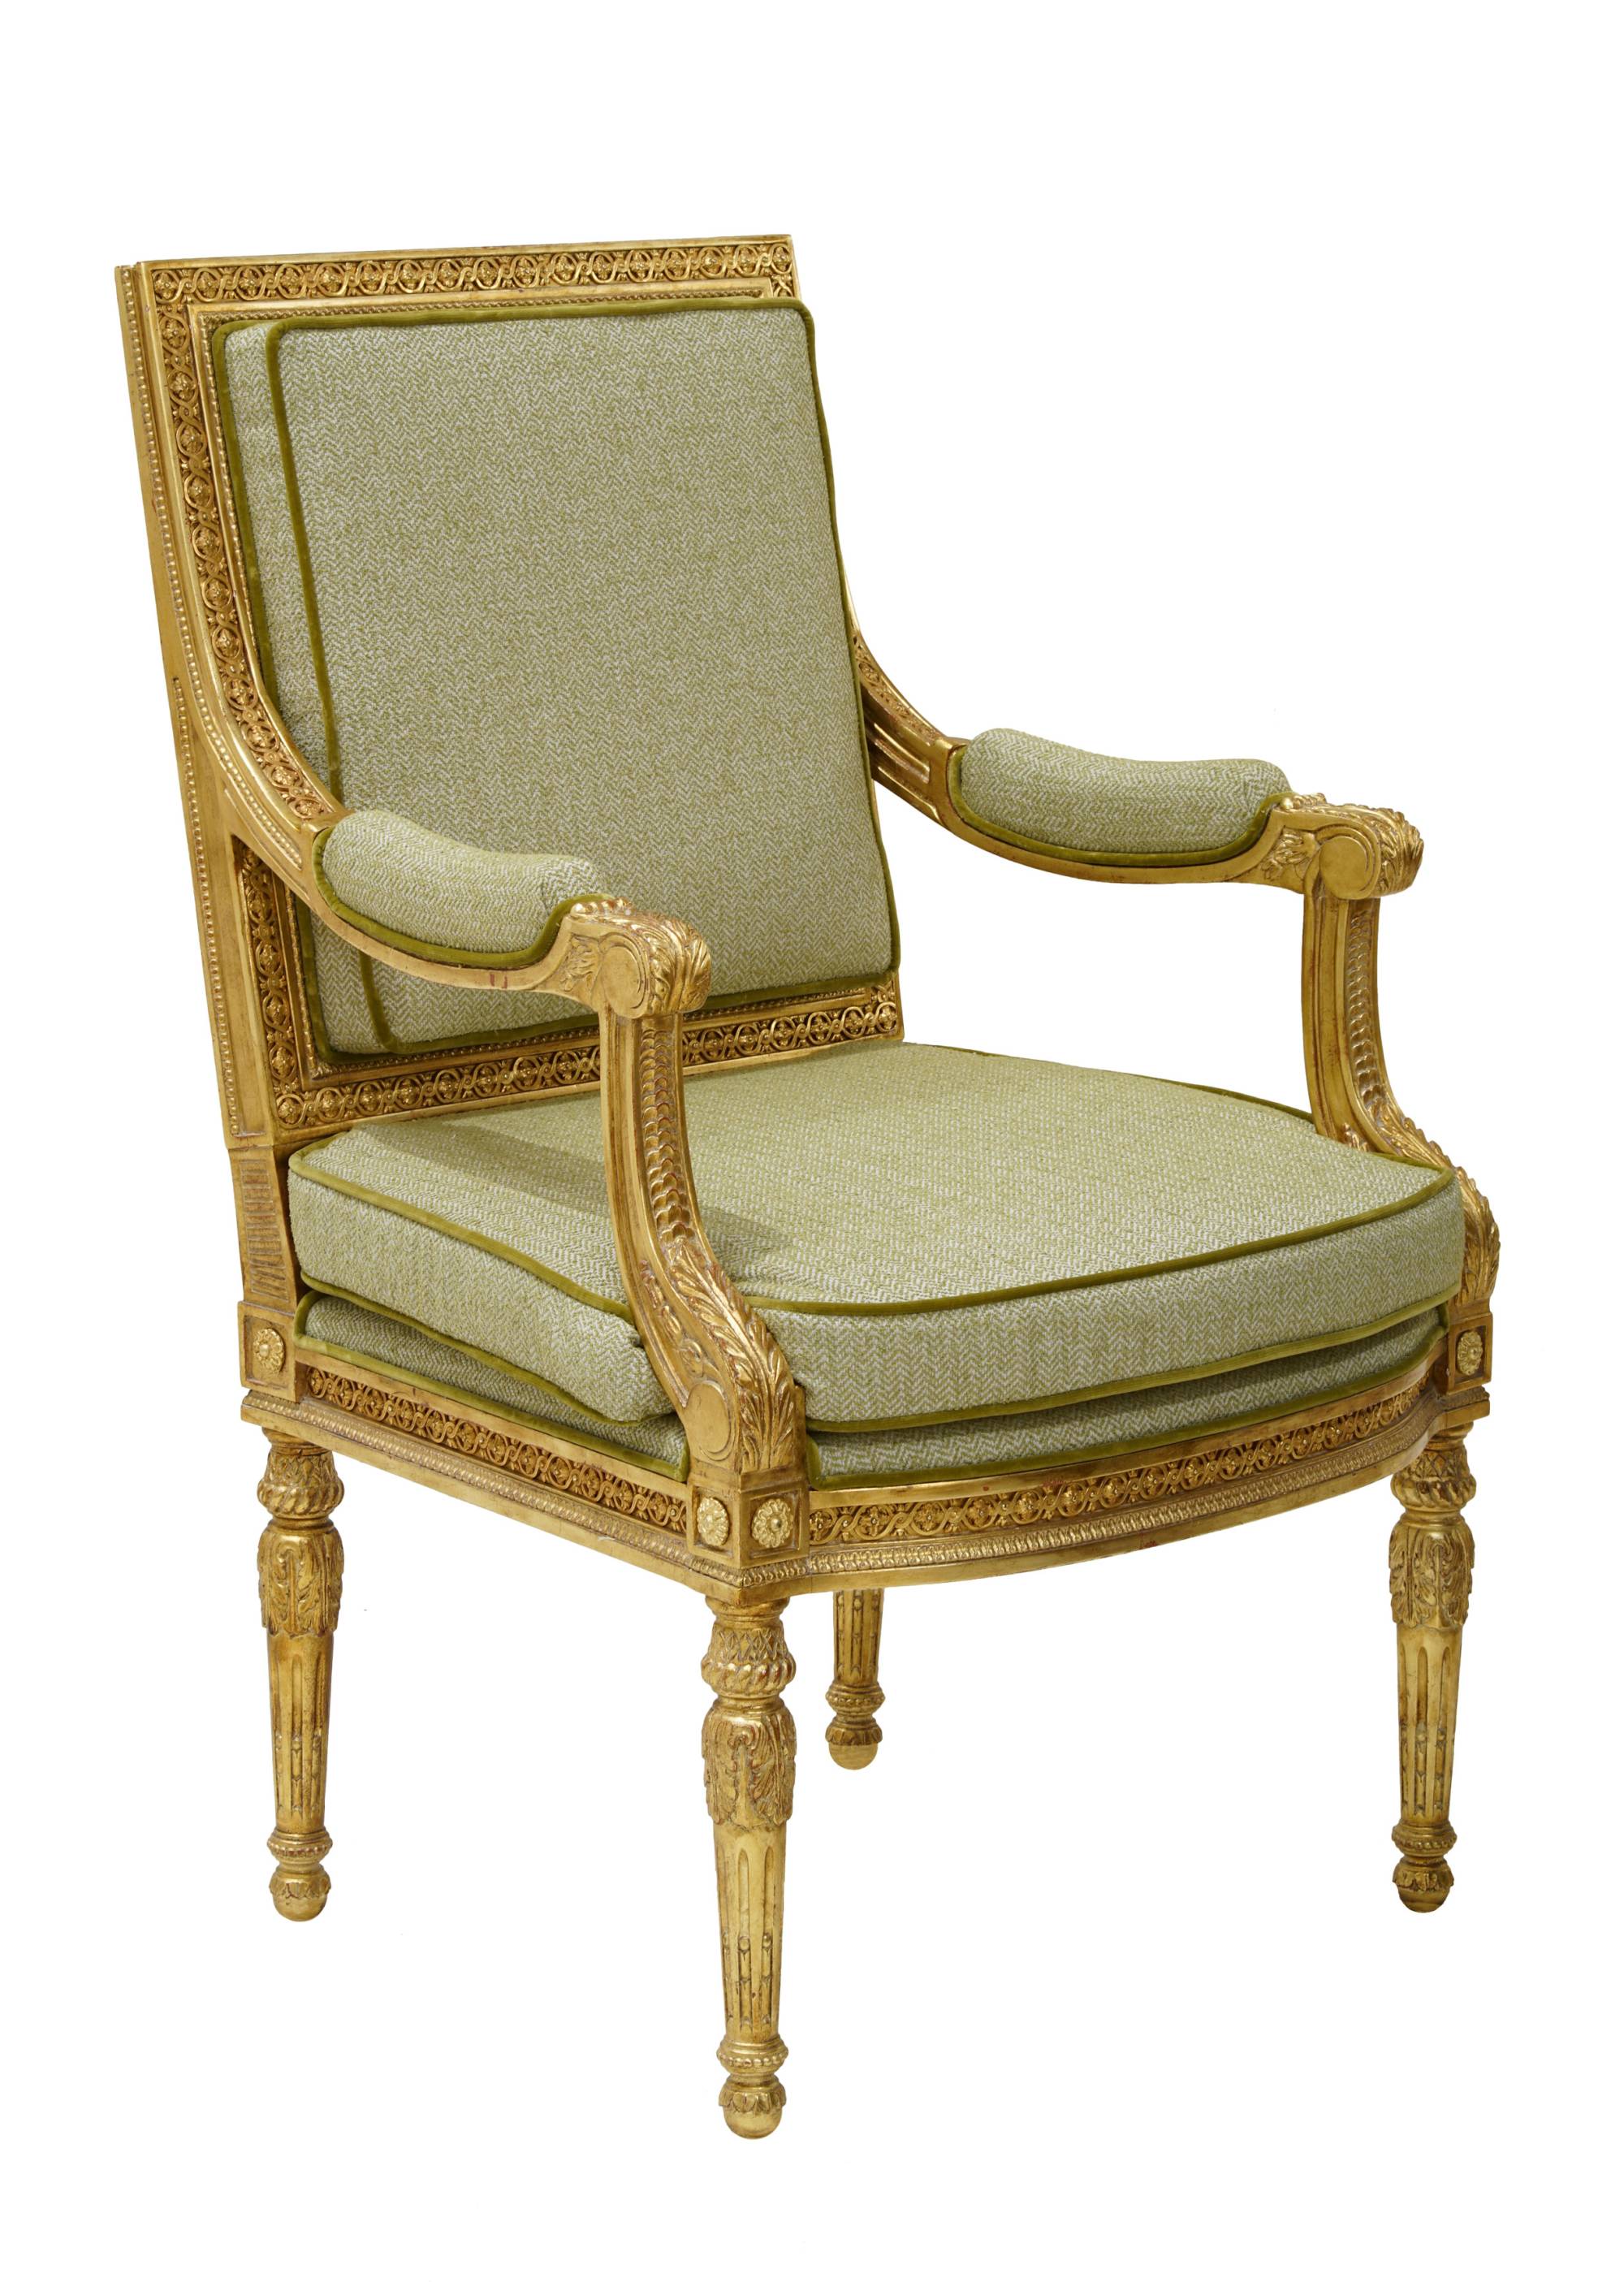 ART. 2206 – C.G. Capelletti Italian Luxury Classic Armchairs. Made in Italy classic interior design